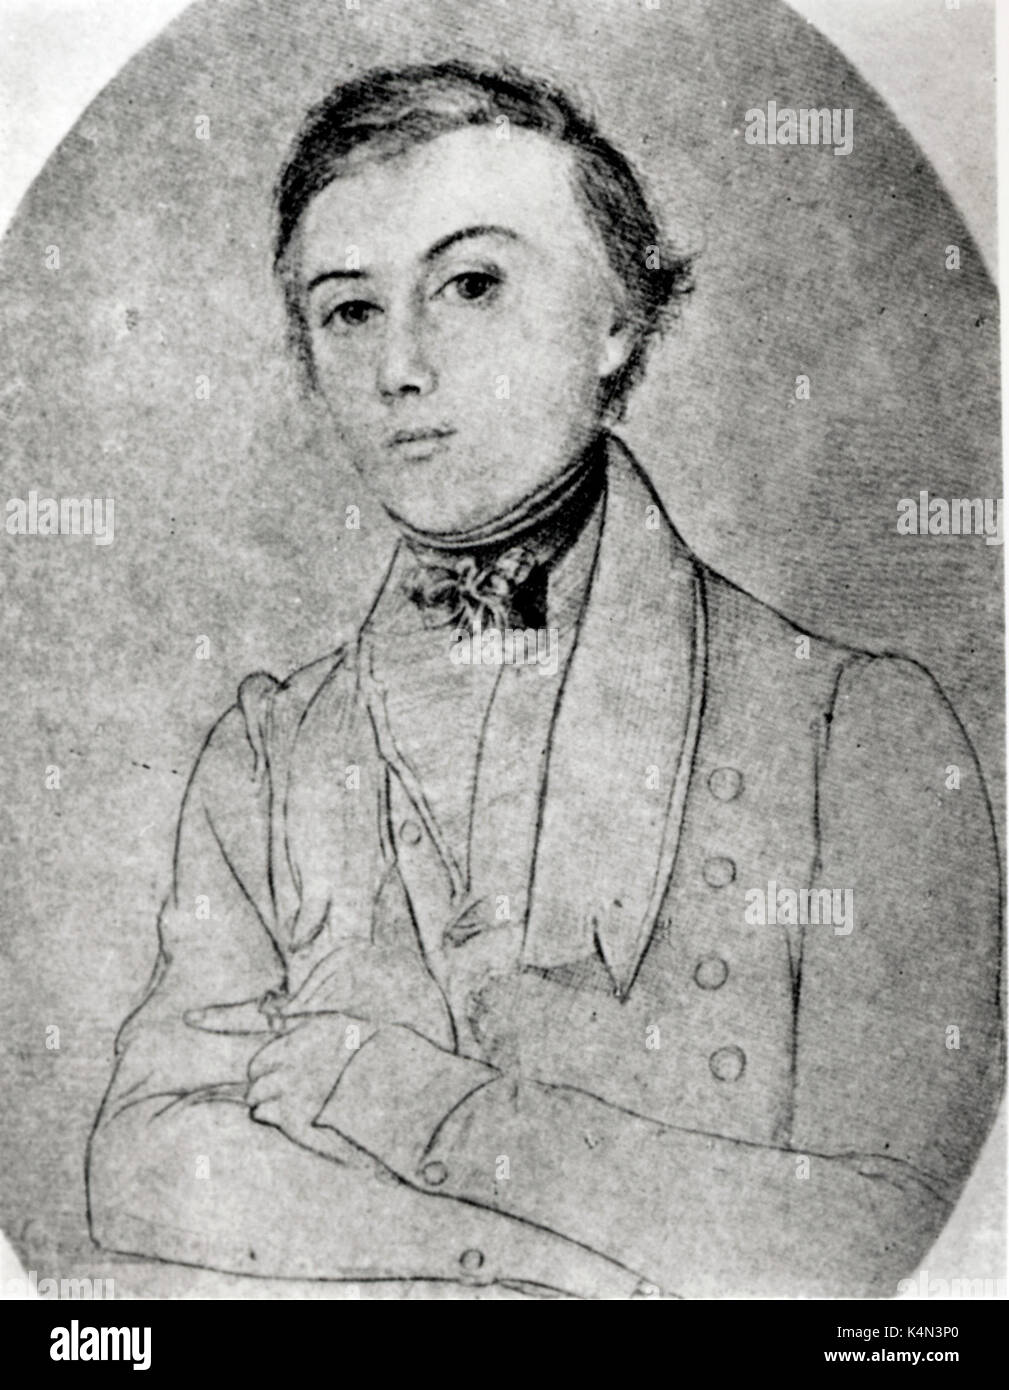 Wilhelm Müller. Amico di Schubert, ha scritto i testi per Schubert's 'Die Schöne Müllerin'. Autore tedesco,1794-1857. Foto Stock